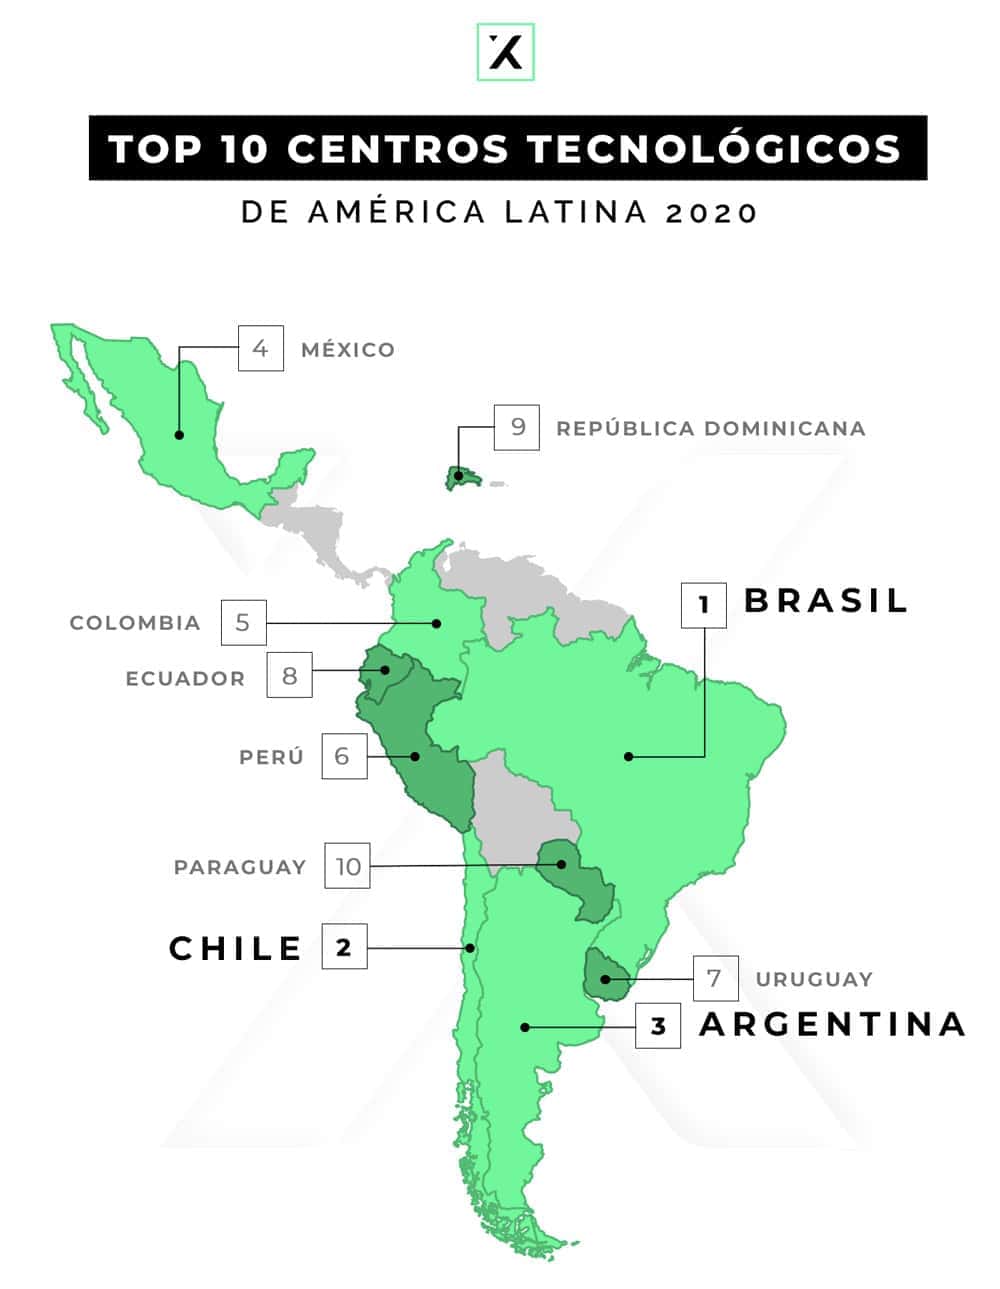 top 10 hubs de tecnología en américa latina en 2020